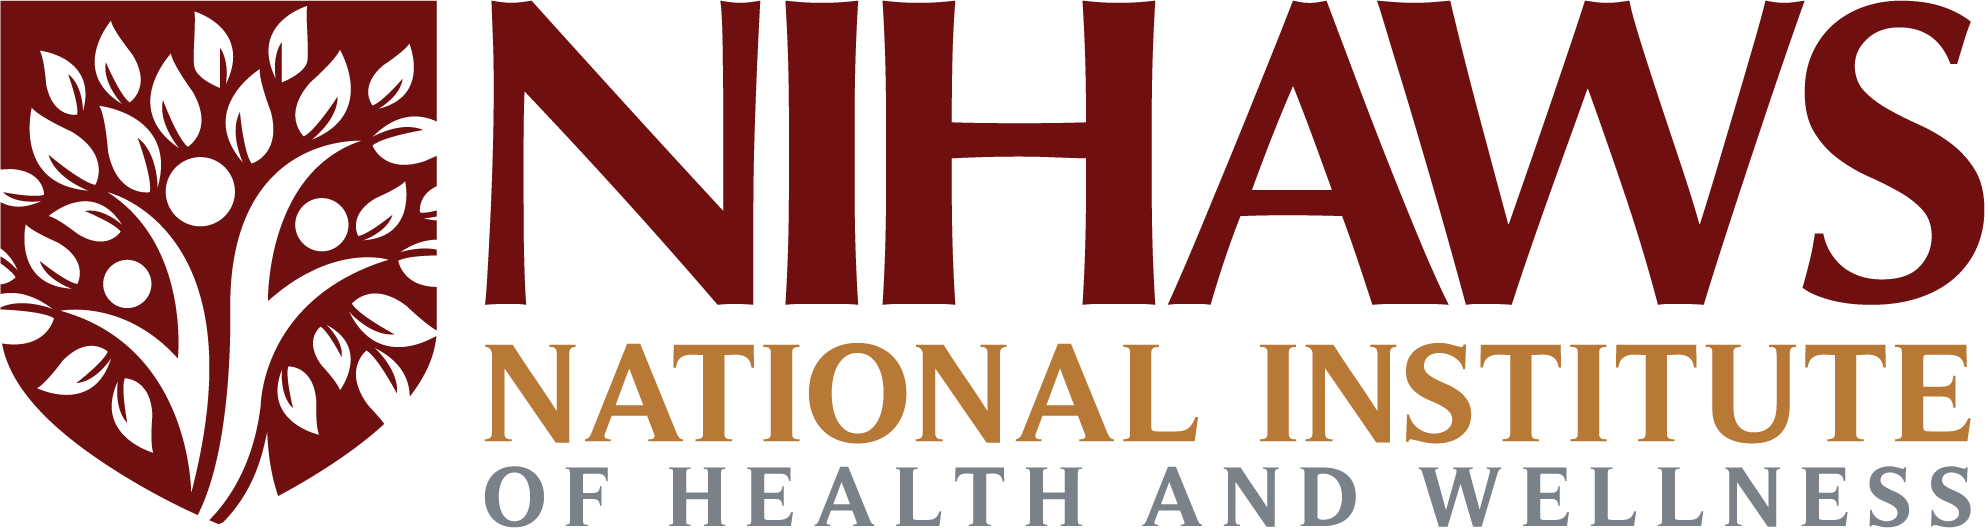 National Institute of Health & Wellness (NIHAWS) Logo